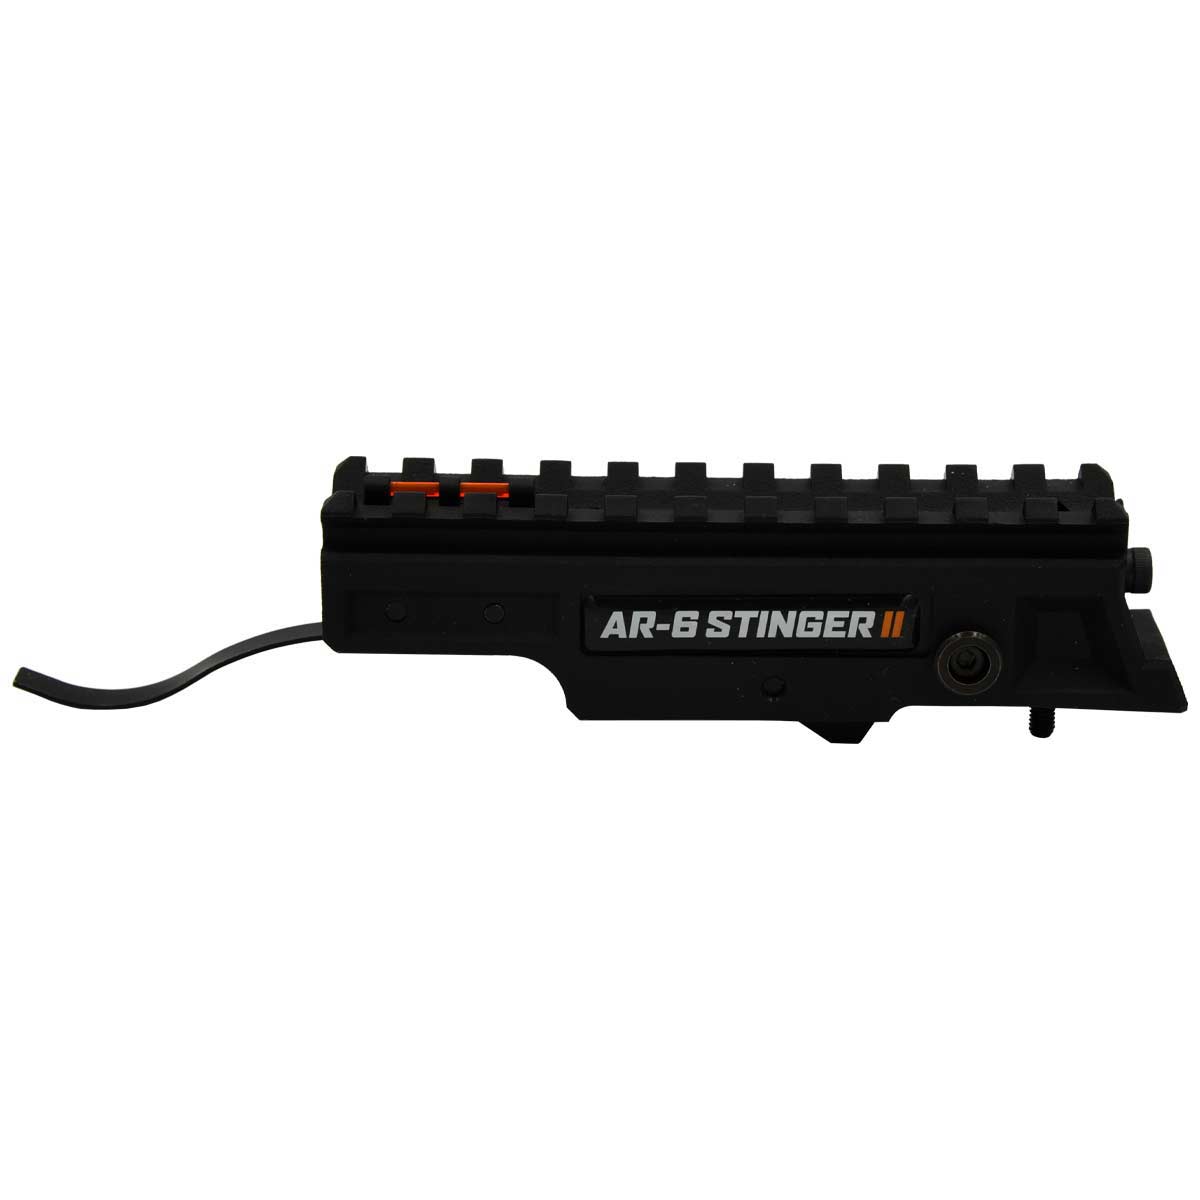 AR-6 Stinger II – Sistema a colpo singolo